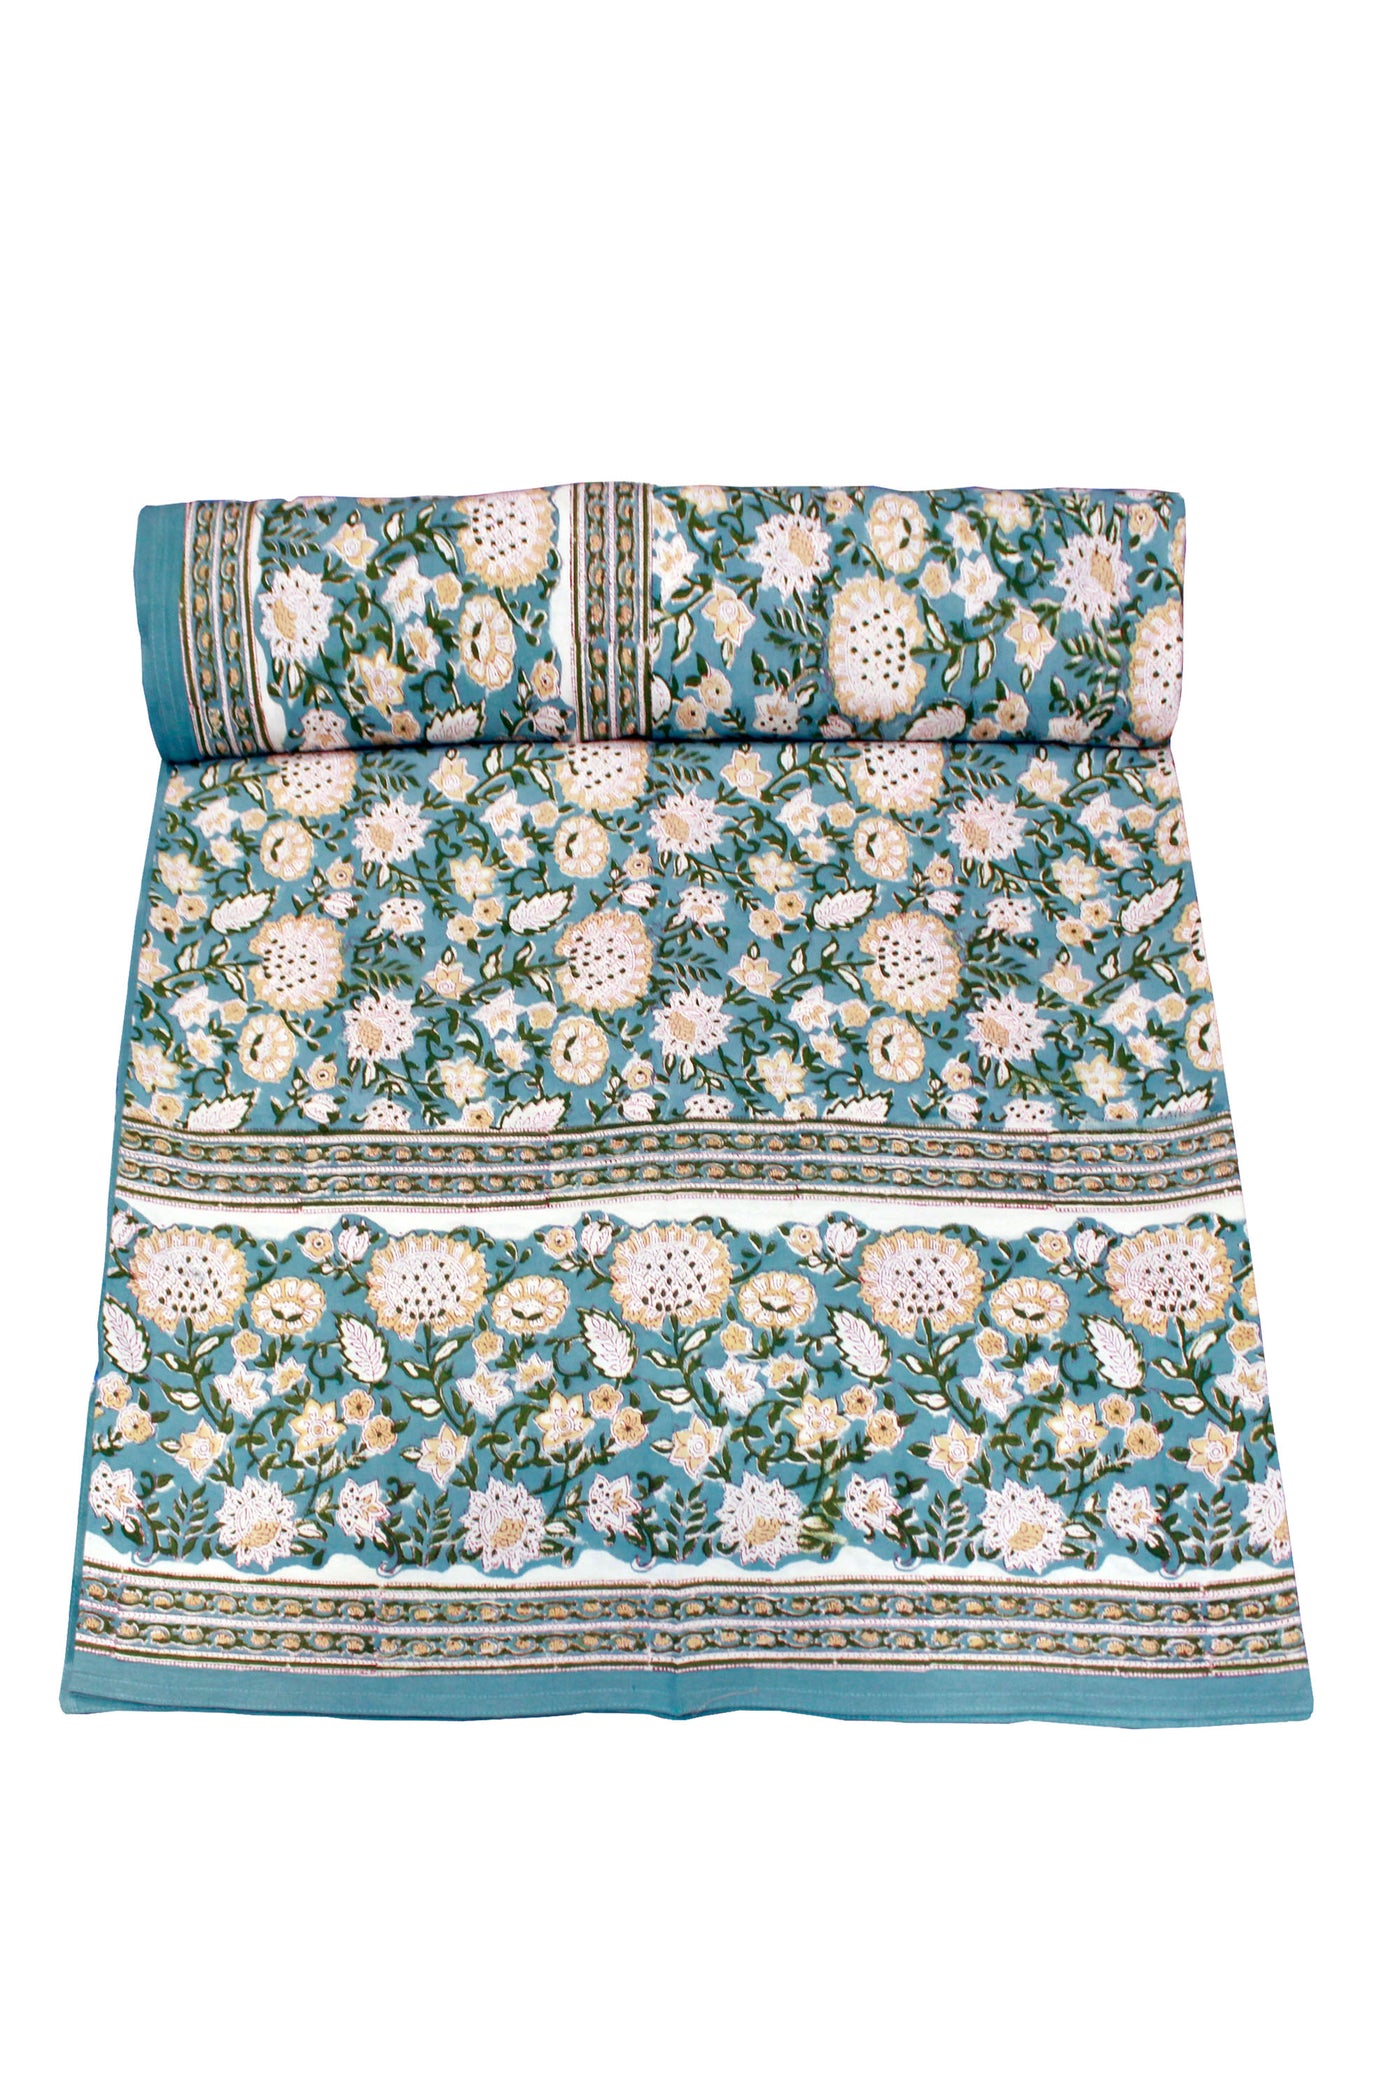 Cotton Mahin Flower Jaal Hand Block Print Bedsheet in Sea Green